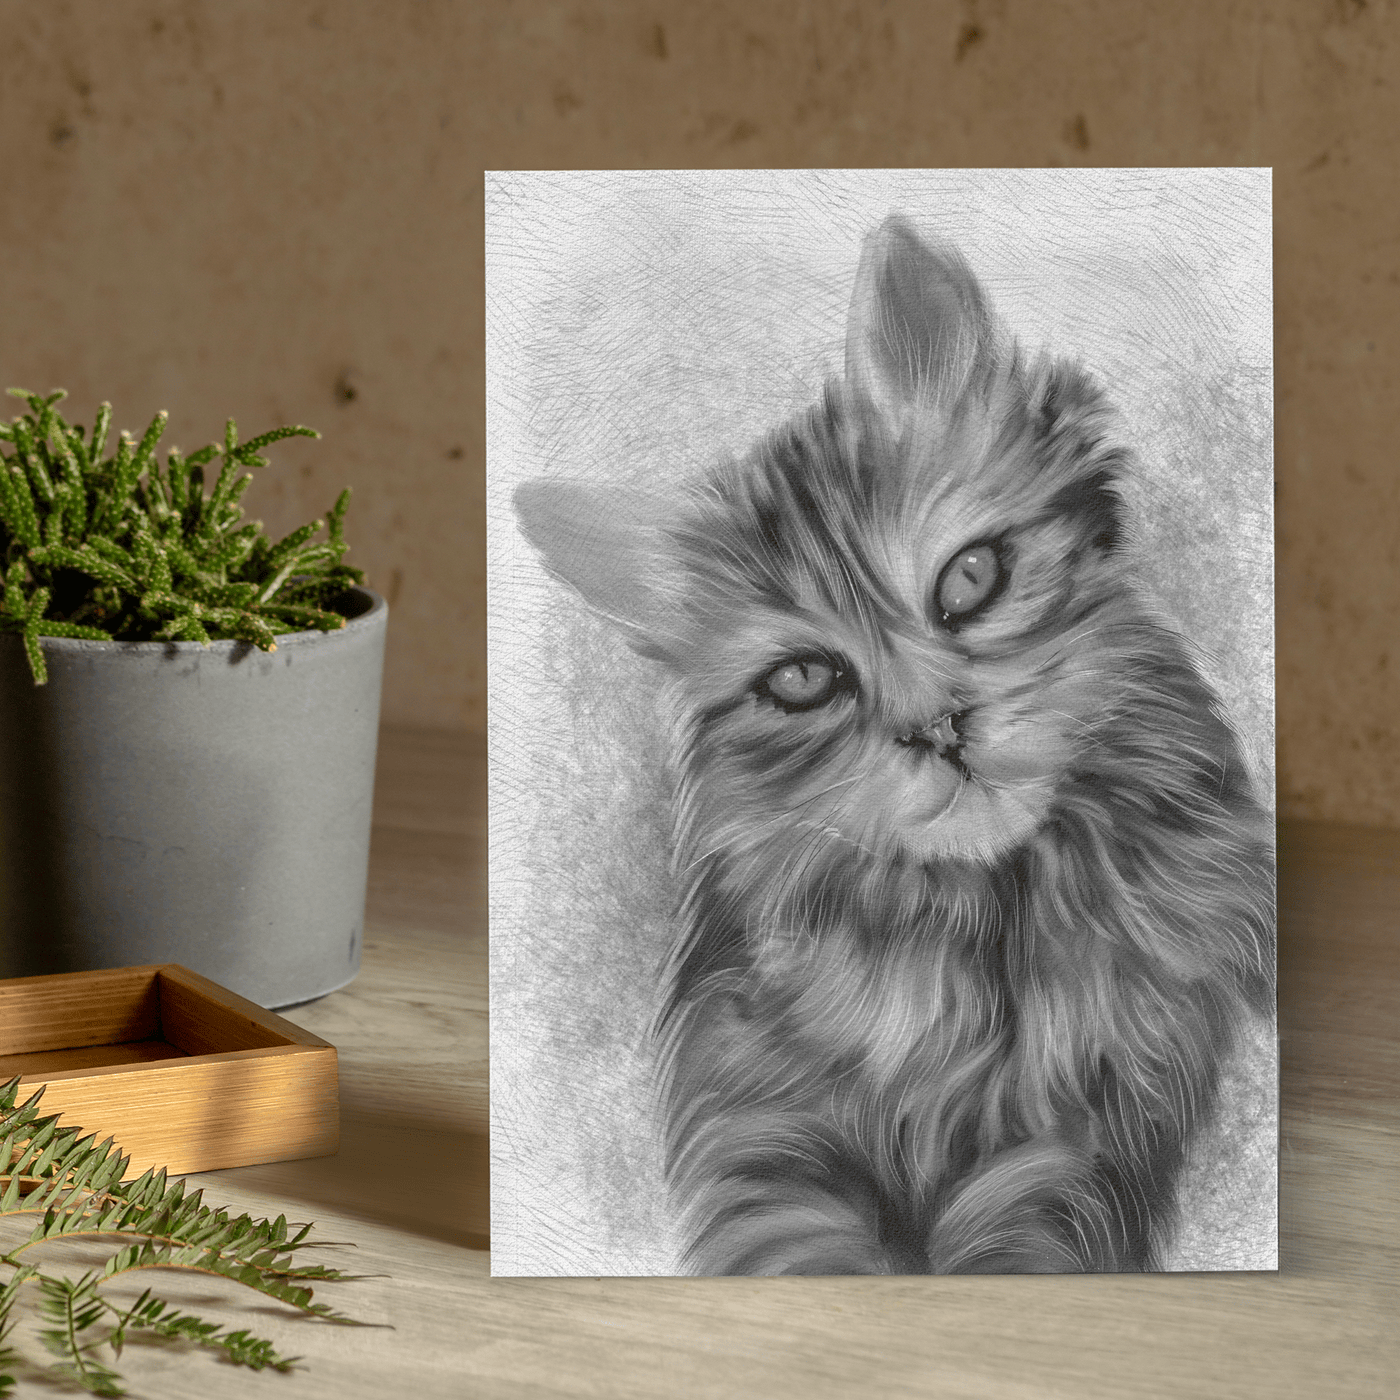 pet pencil sketch of an adorable cat